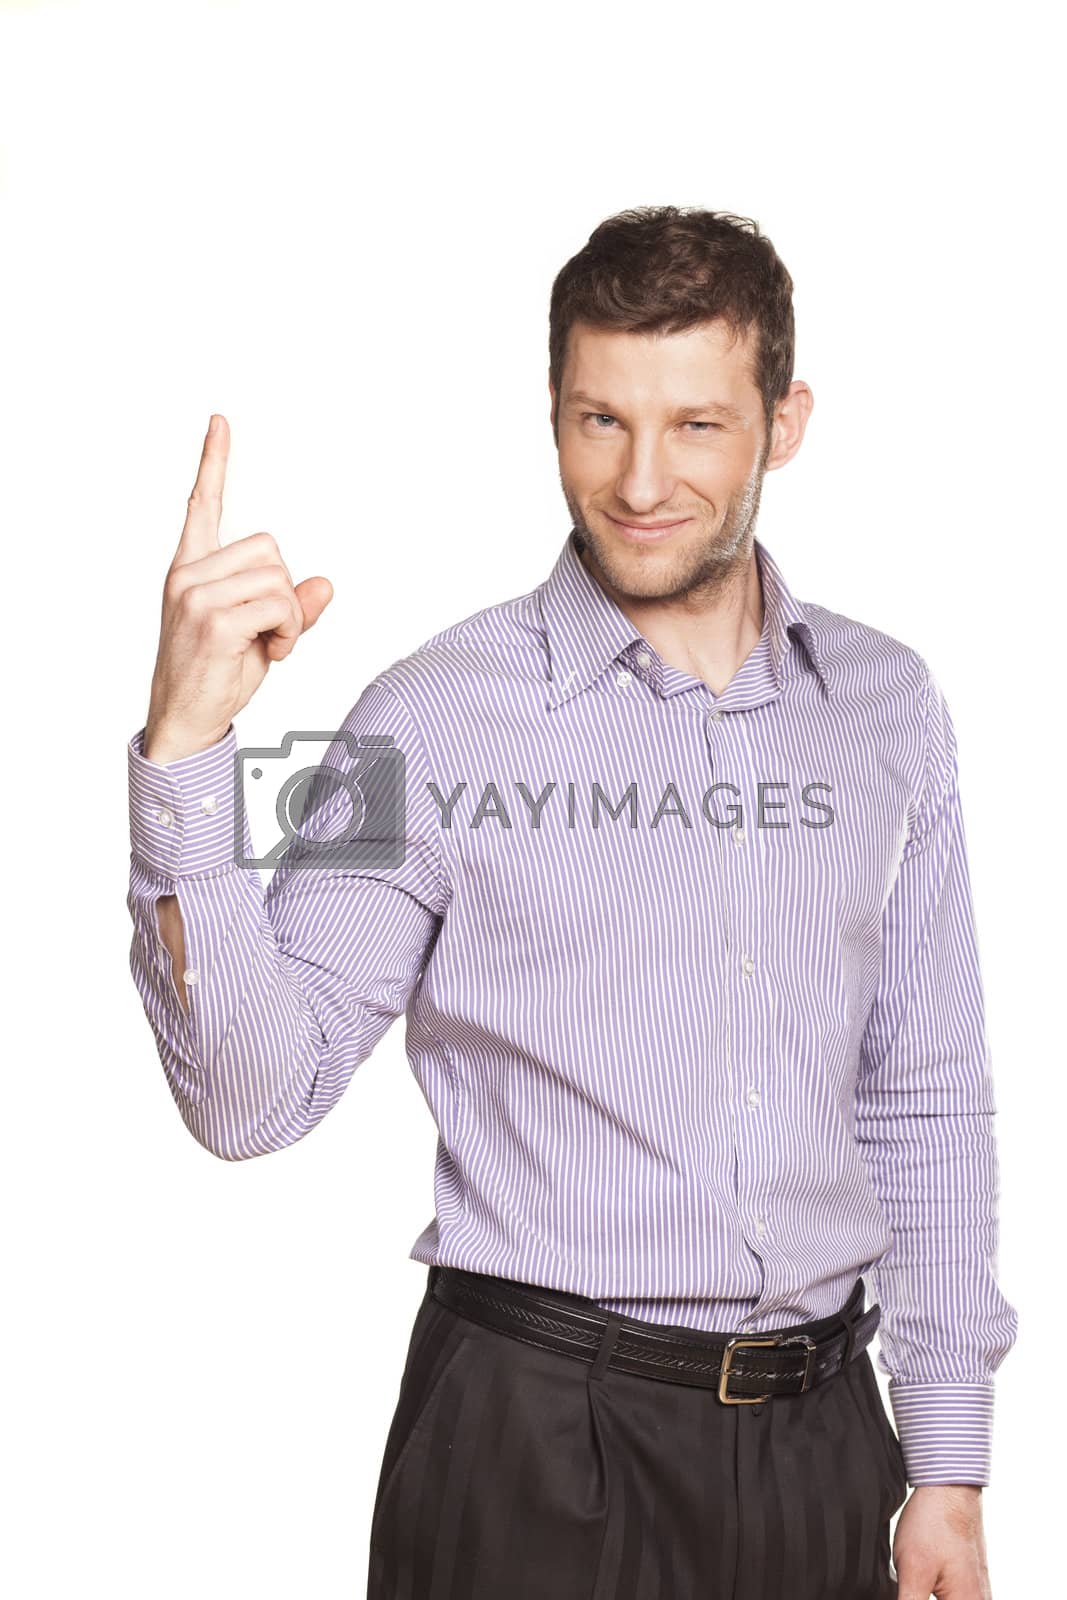 Royalty free image of businessman pointing by Vladimirfloyd